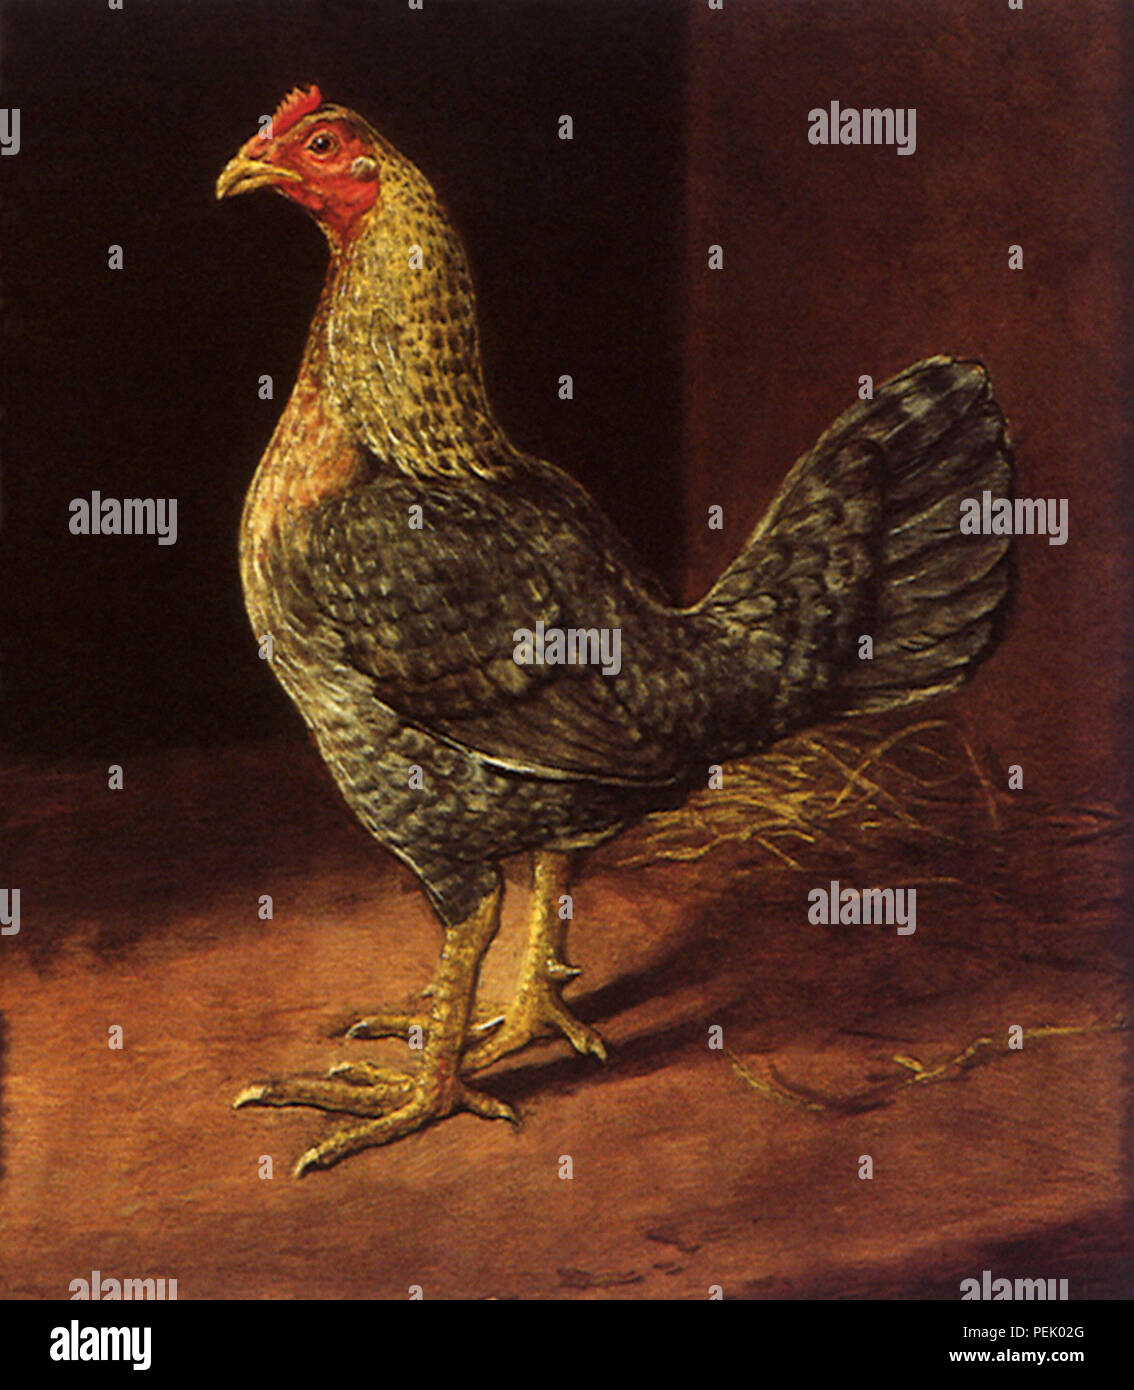 A Creel Old English Bantam Game Hen, Atkinson, Herbert Stock Photo